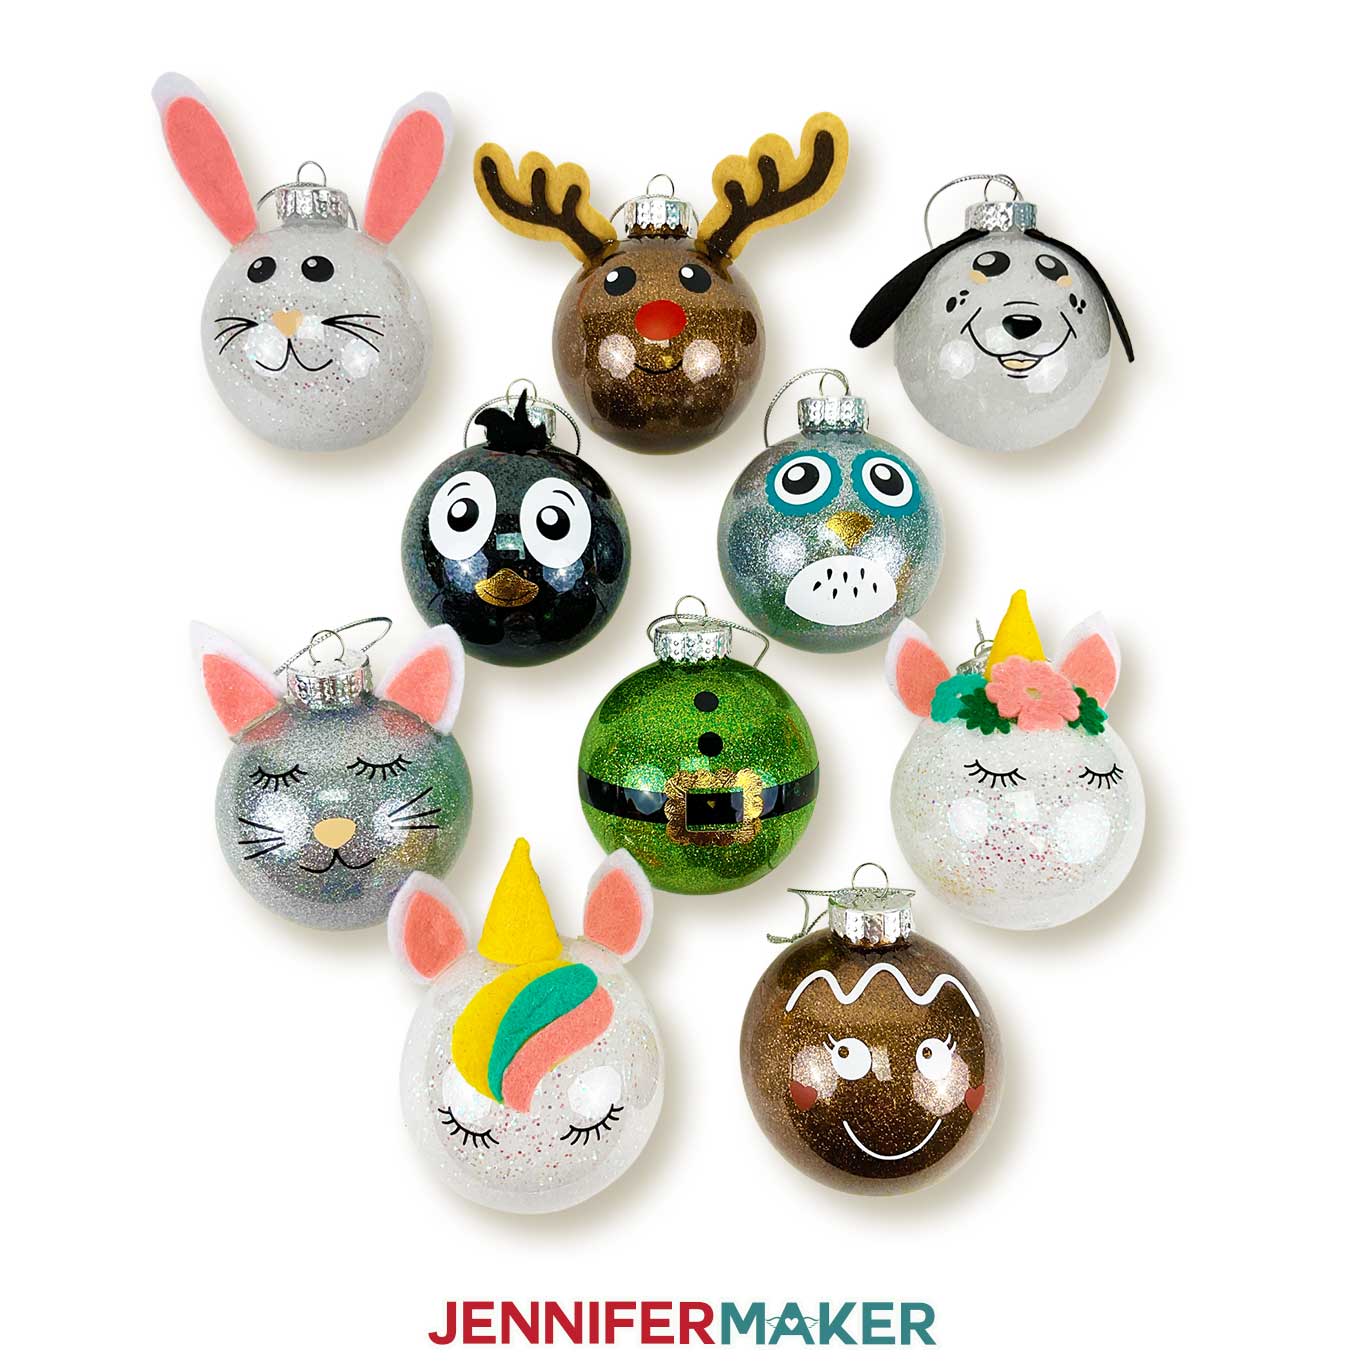 DIY Glitter Ornaments the Easy Way + Cute Animal Designs! - Jennifer Maker